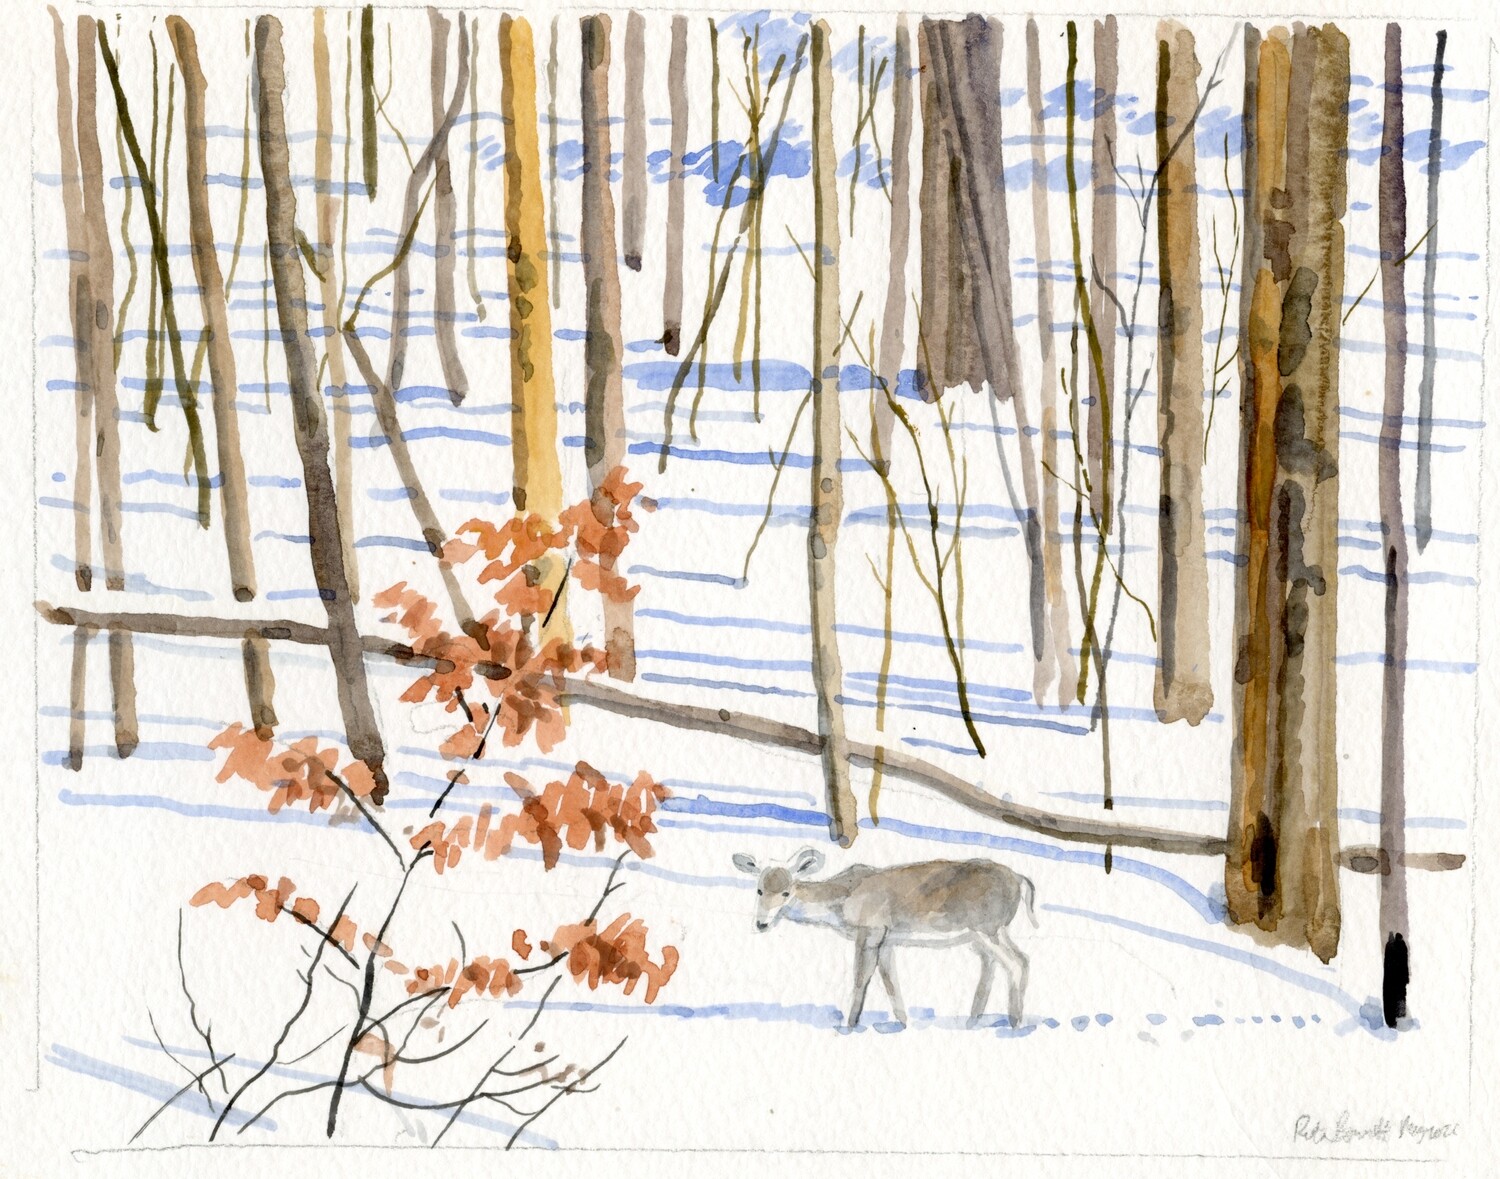 Snow Deer Amidst Long Blue Shadows